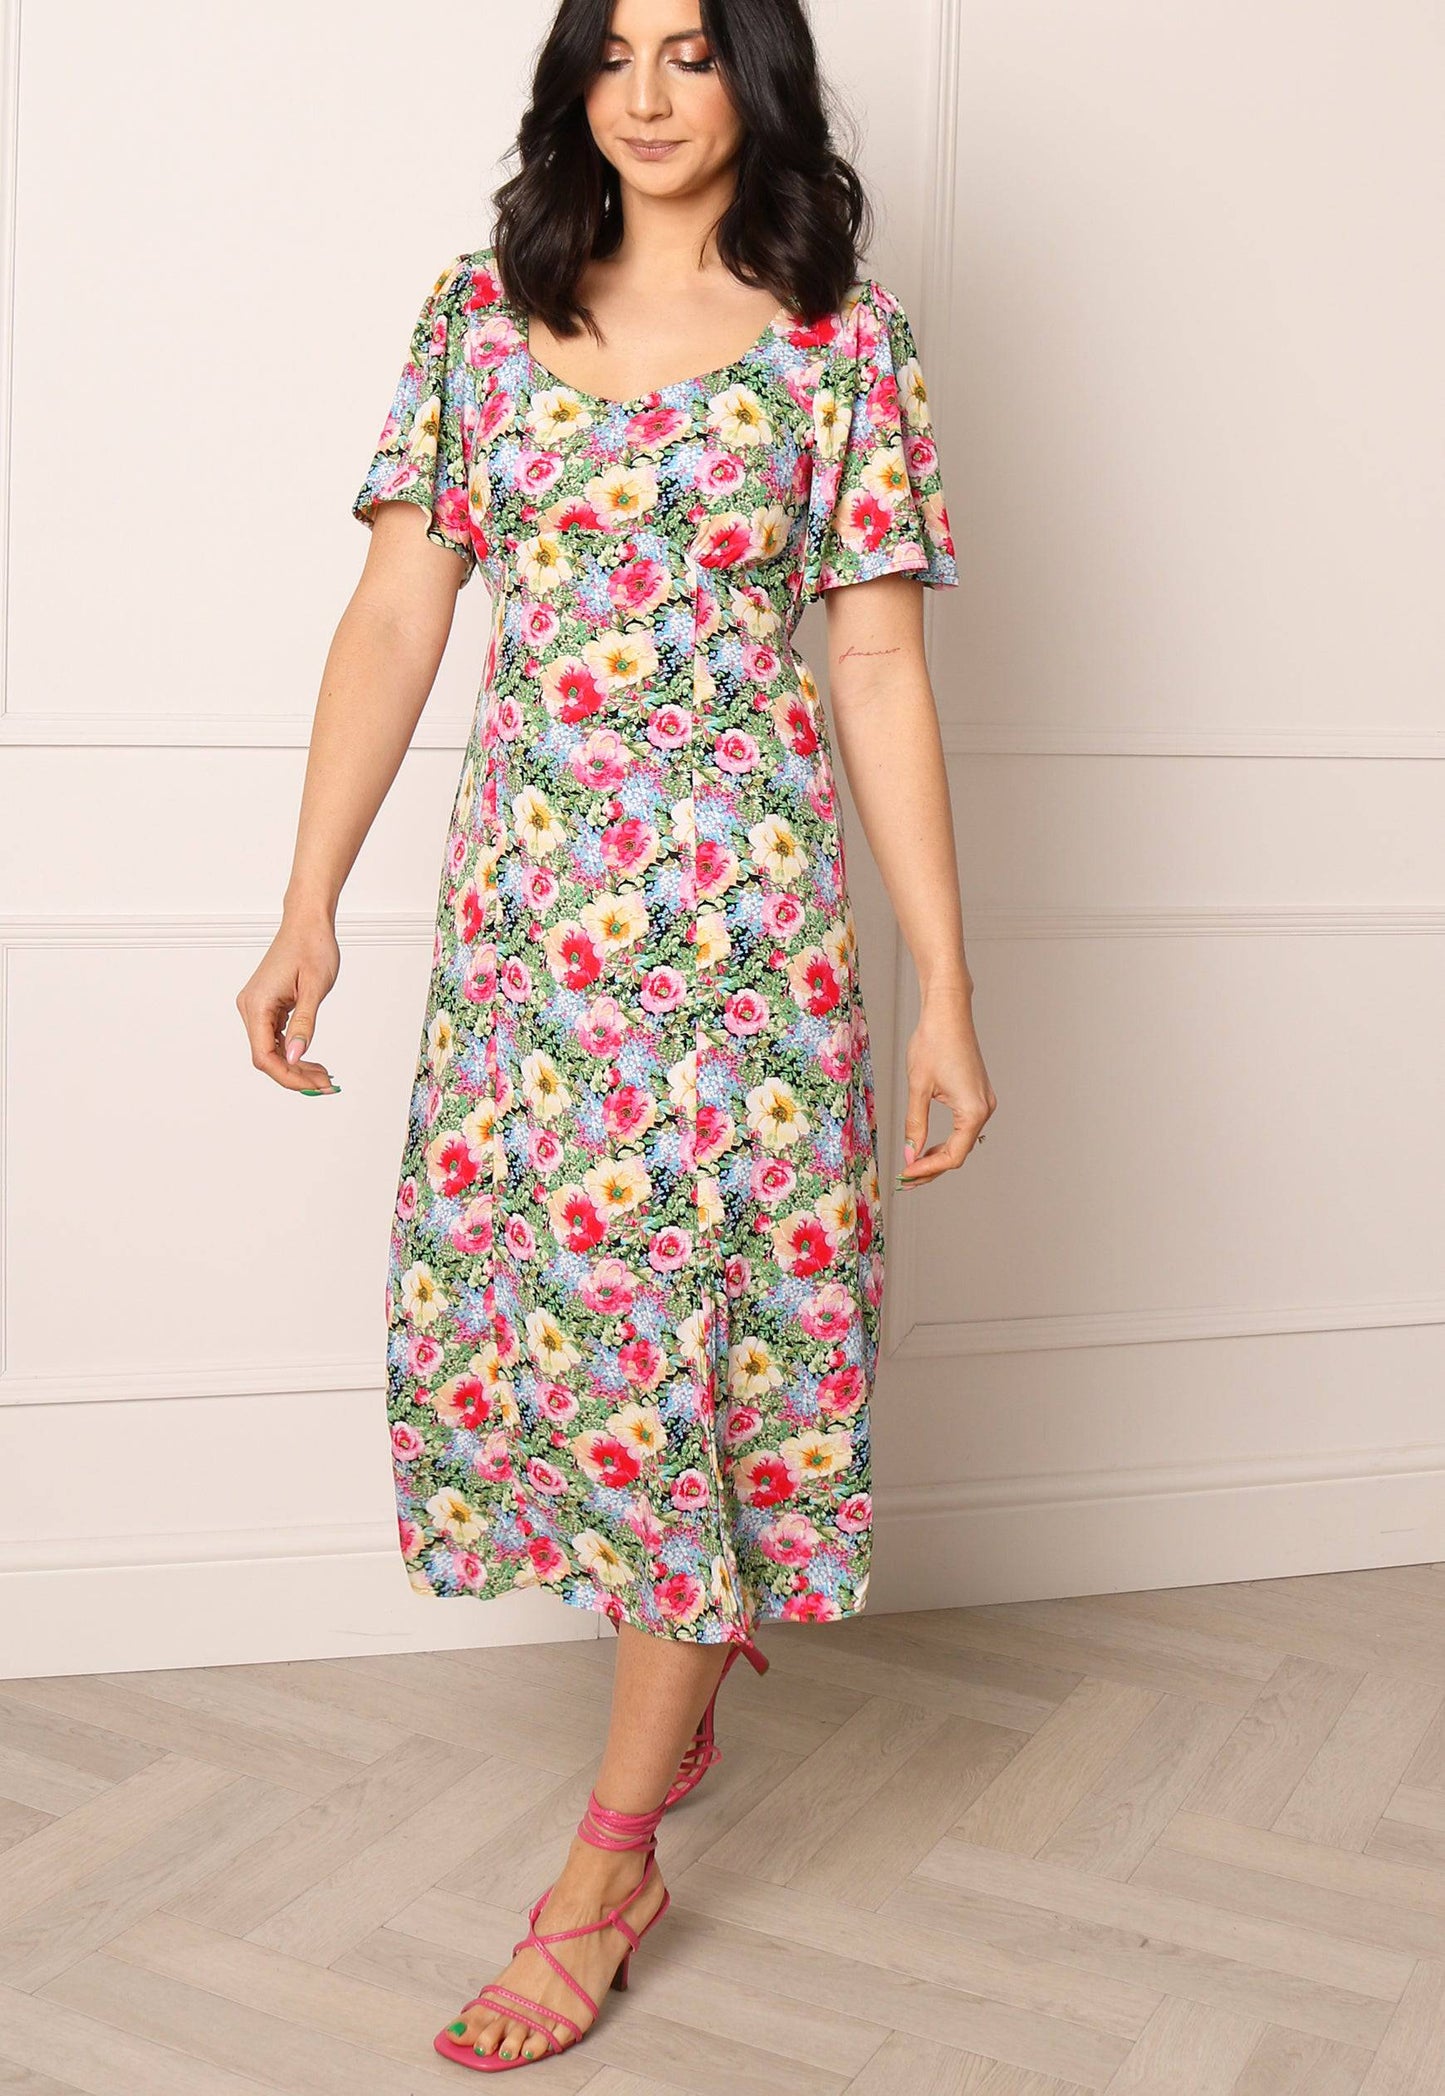 
                  
                    VERO MODA Easy Floral Print Sweetheart Neckline Midi Tea Dress in Pink, Yellow & Green - One Nation Clothing
                  
                